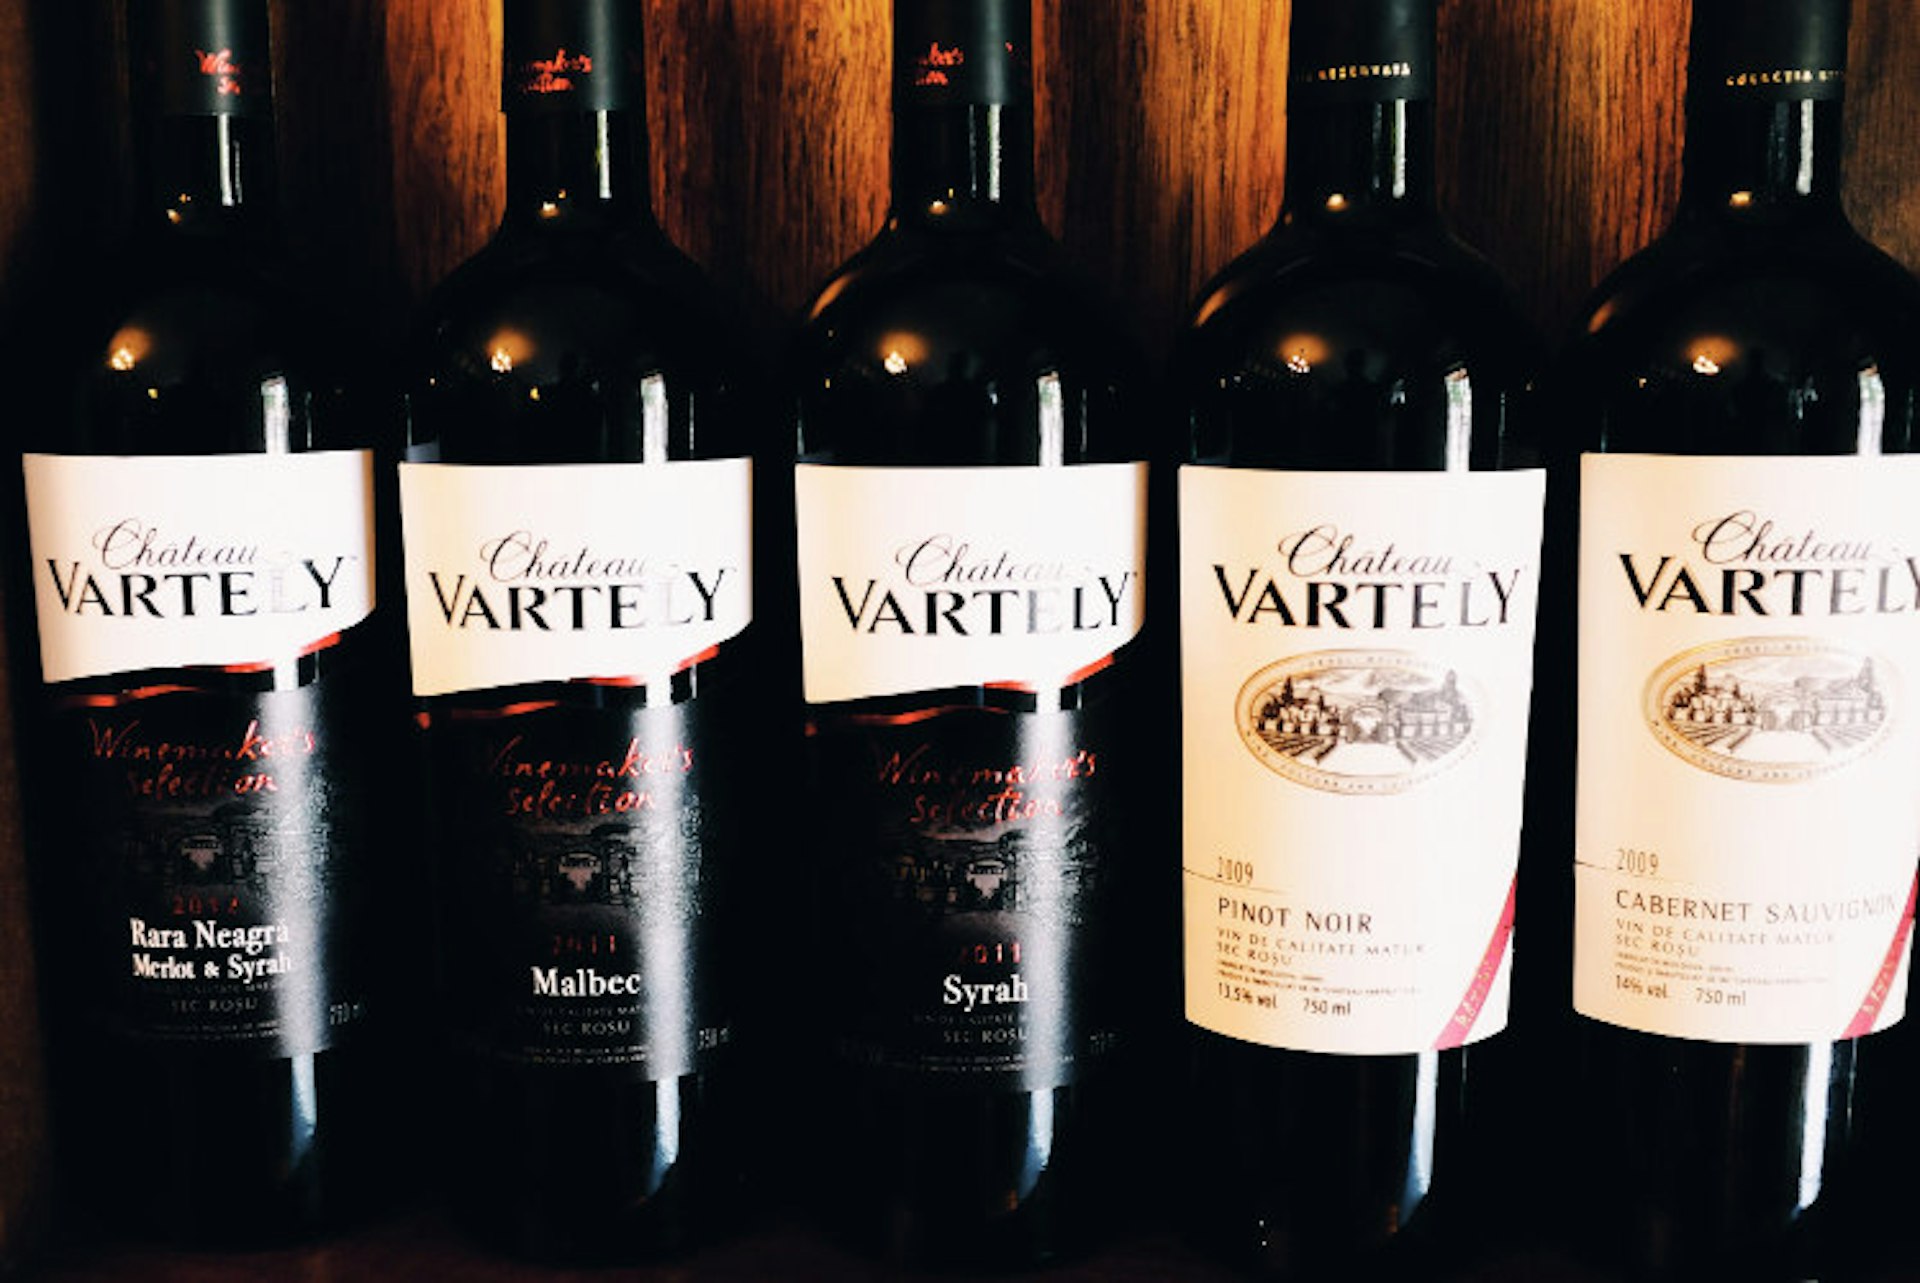 Bottles from Chateau Vartely at Carpe Diem wine store, Chişinău. Image by Mark Baker / Lonely Planet